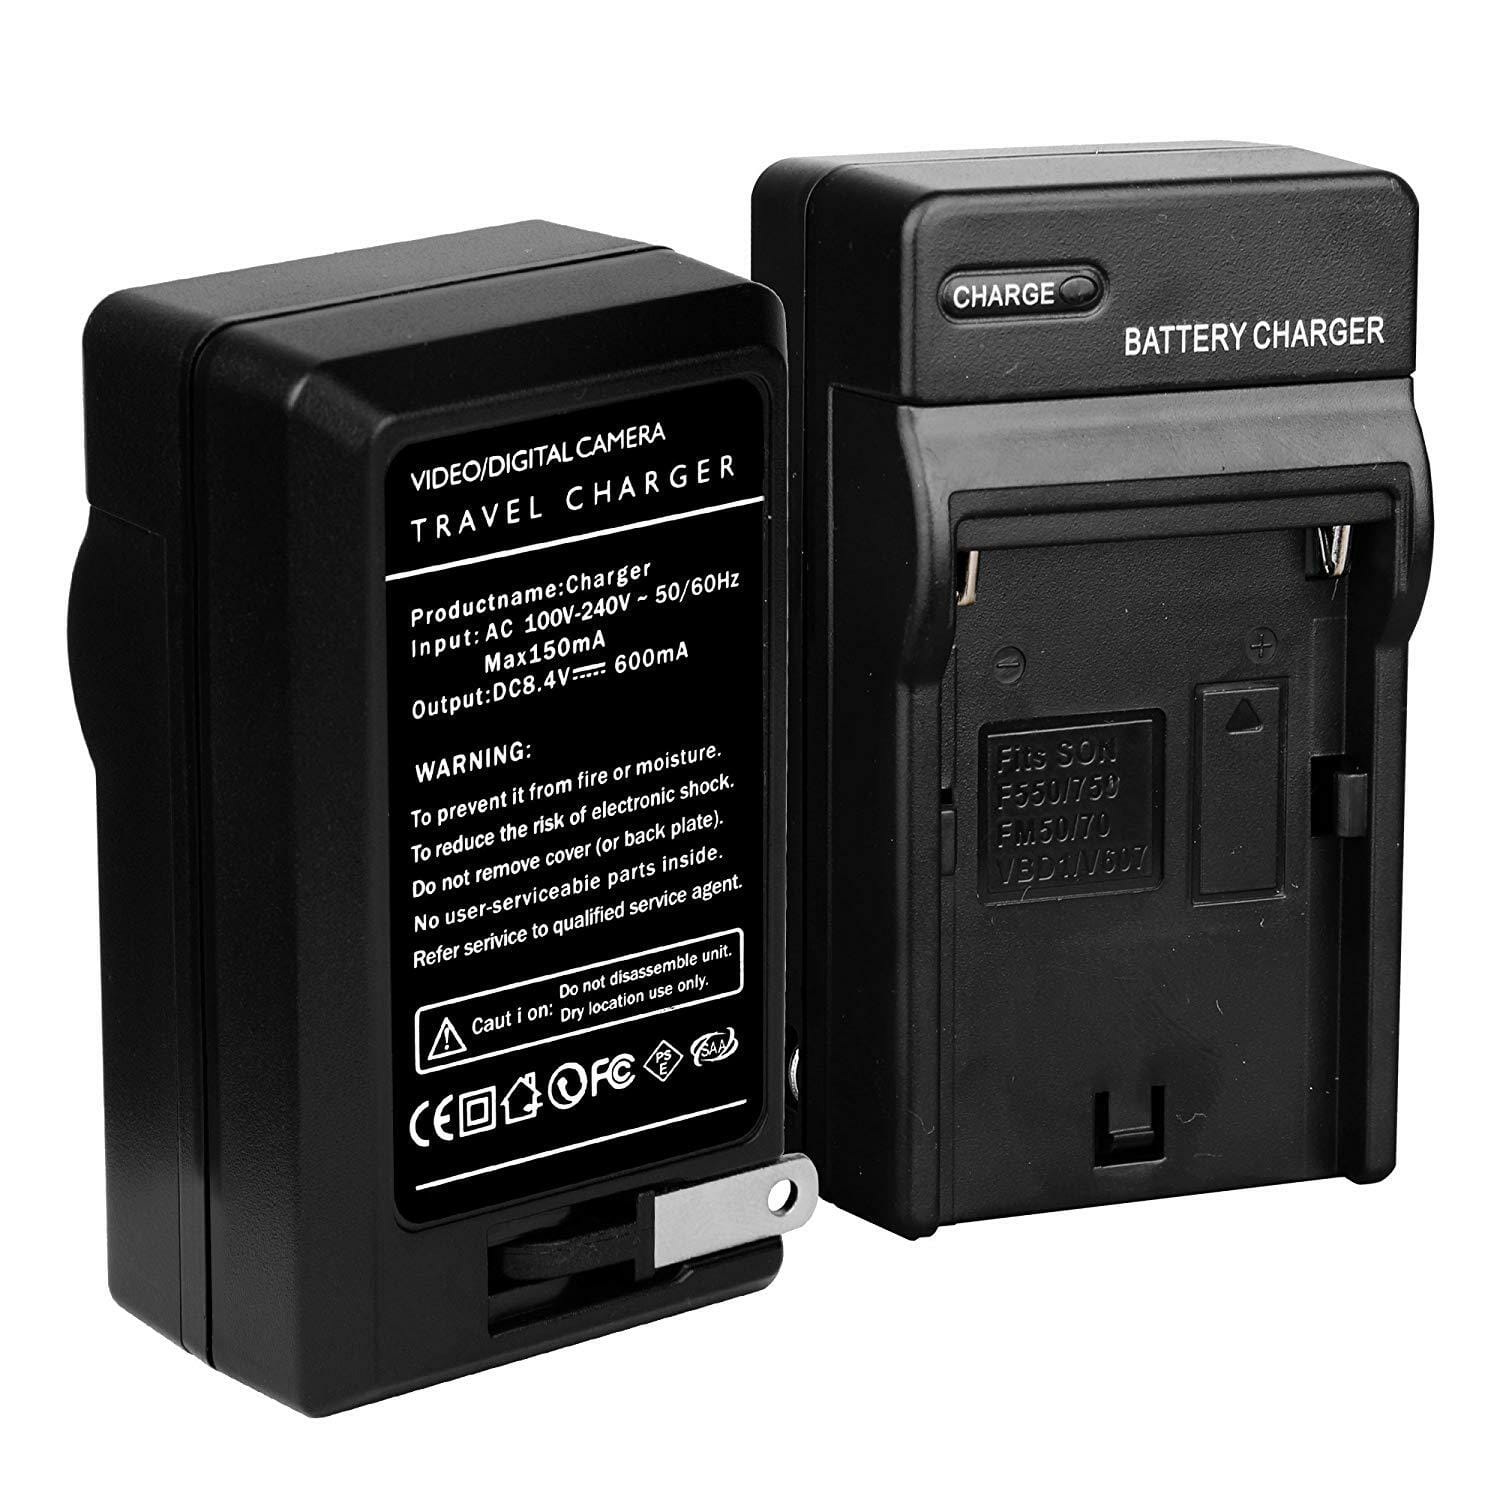 GVM NPF 750 Li-ion Battery and Charger - mylensball.com.au